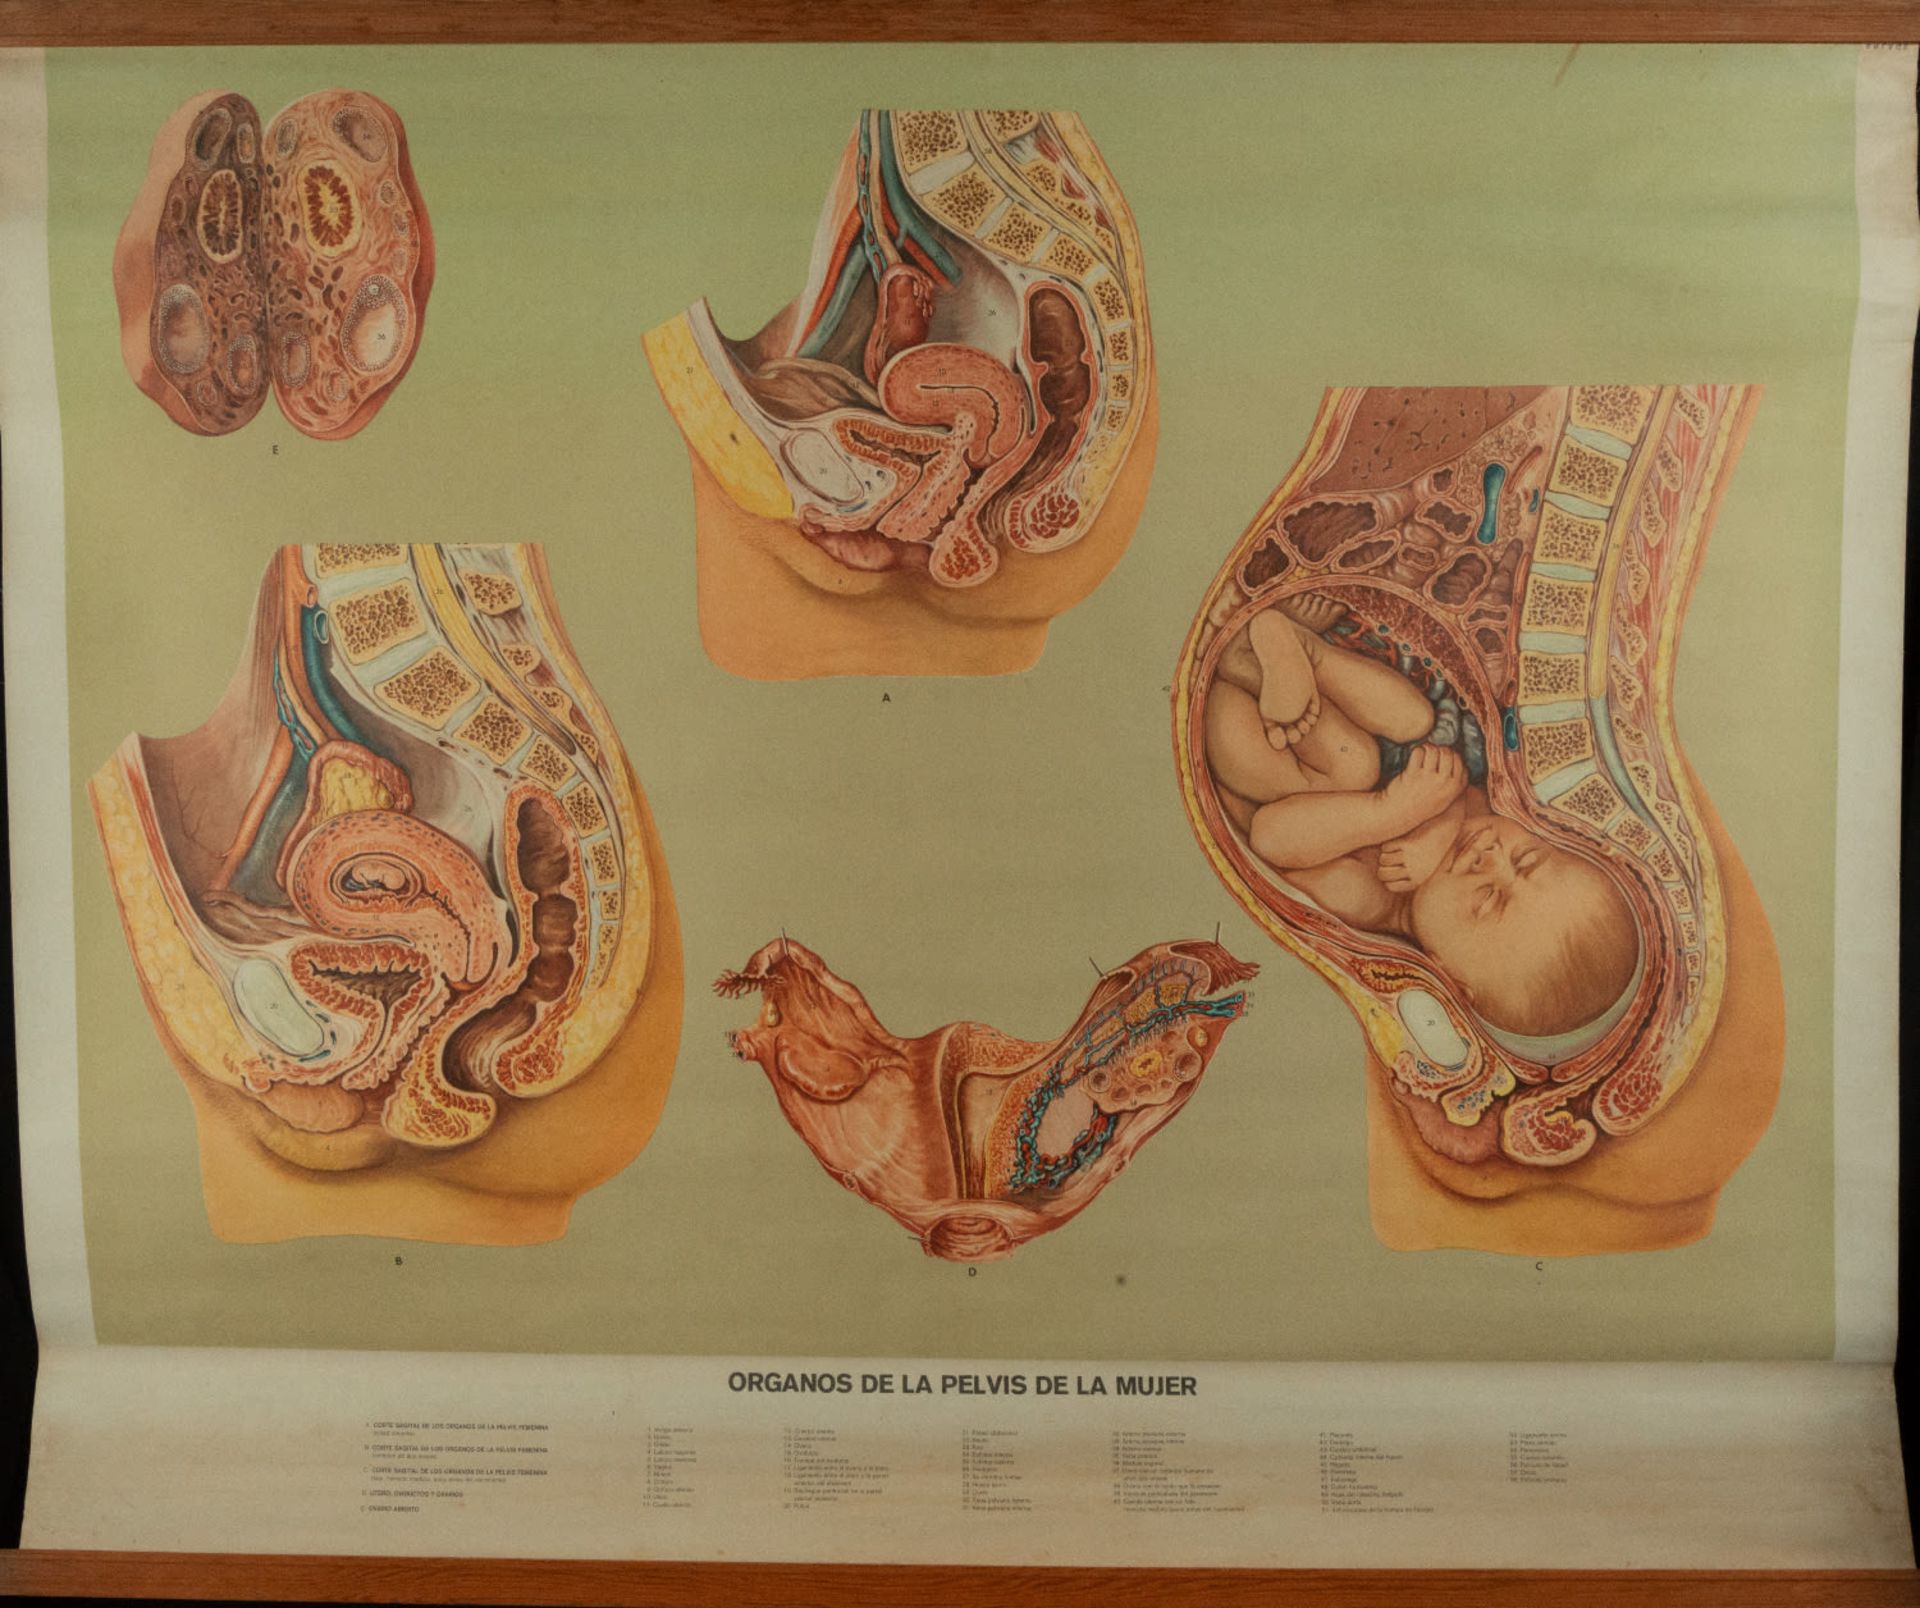 Natural History, Large Medical Illustrative Poster, 1930s-1940s